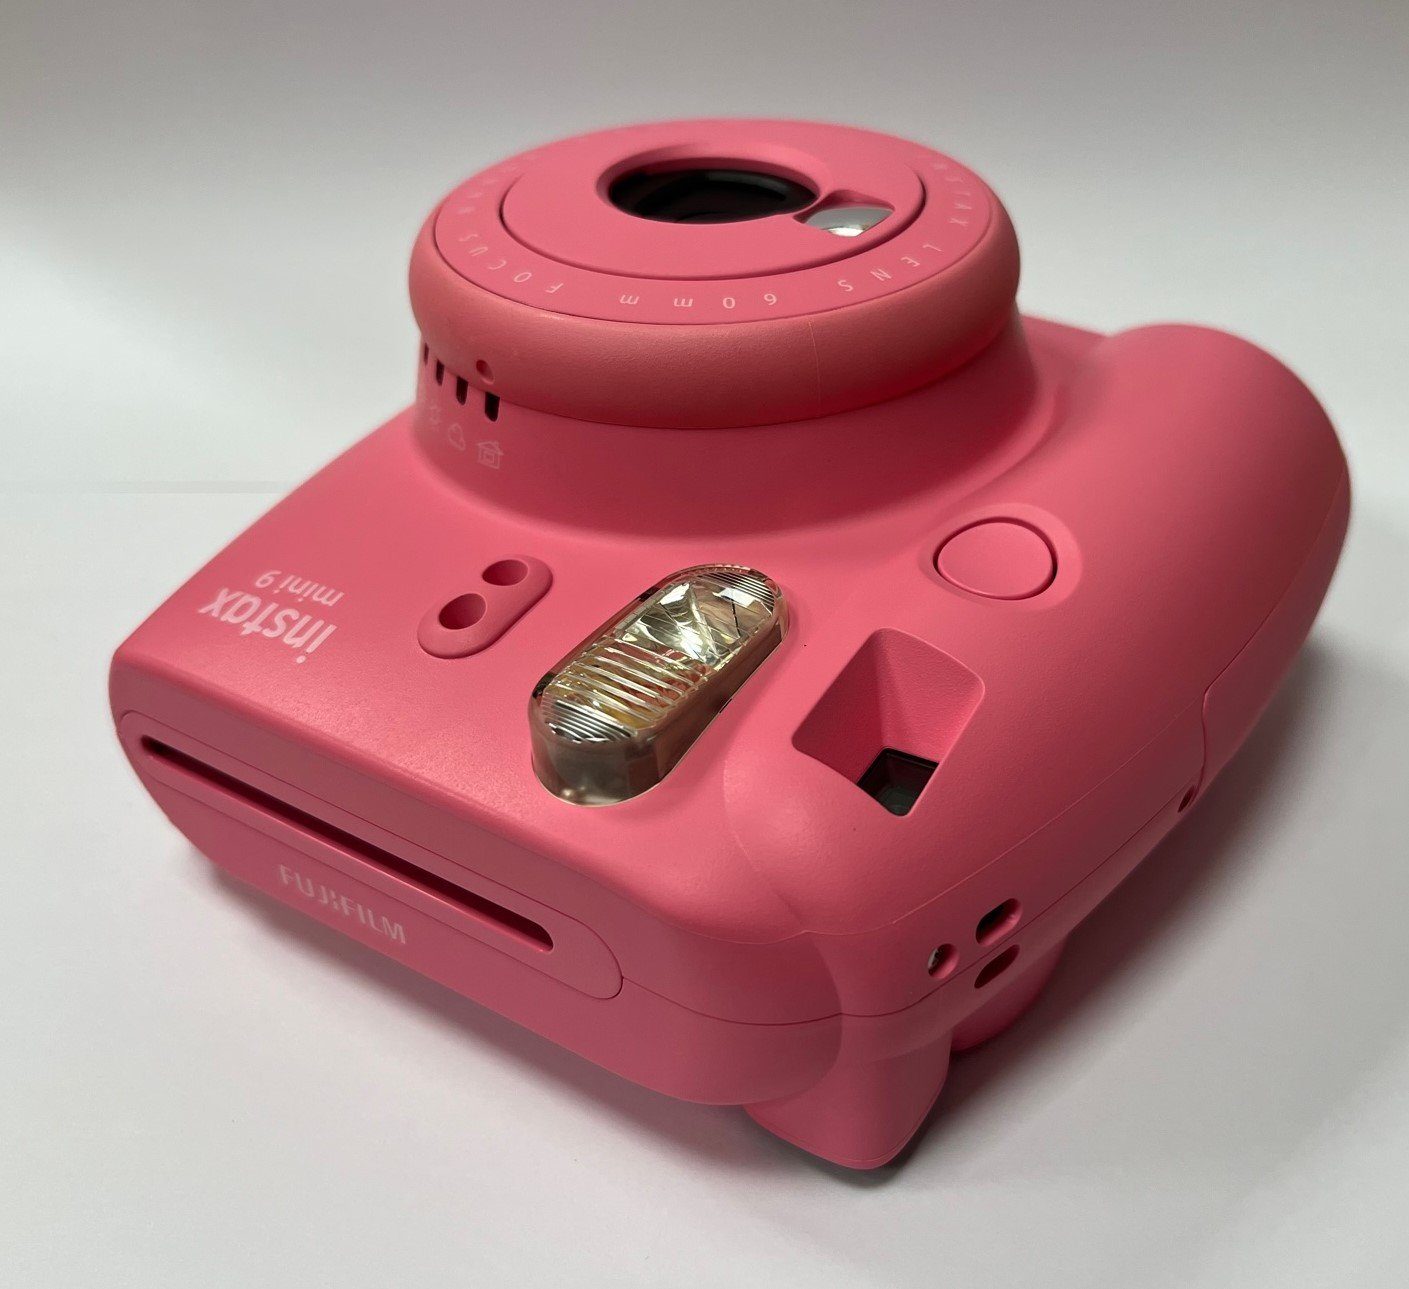 FUJIFILM Instax Mini 9 10 Film inklusive Sofortbildkamera mit Aufnahmen Flamingo-Pink